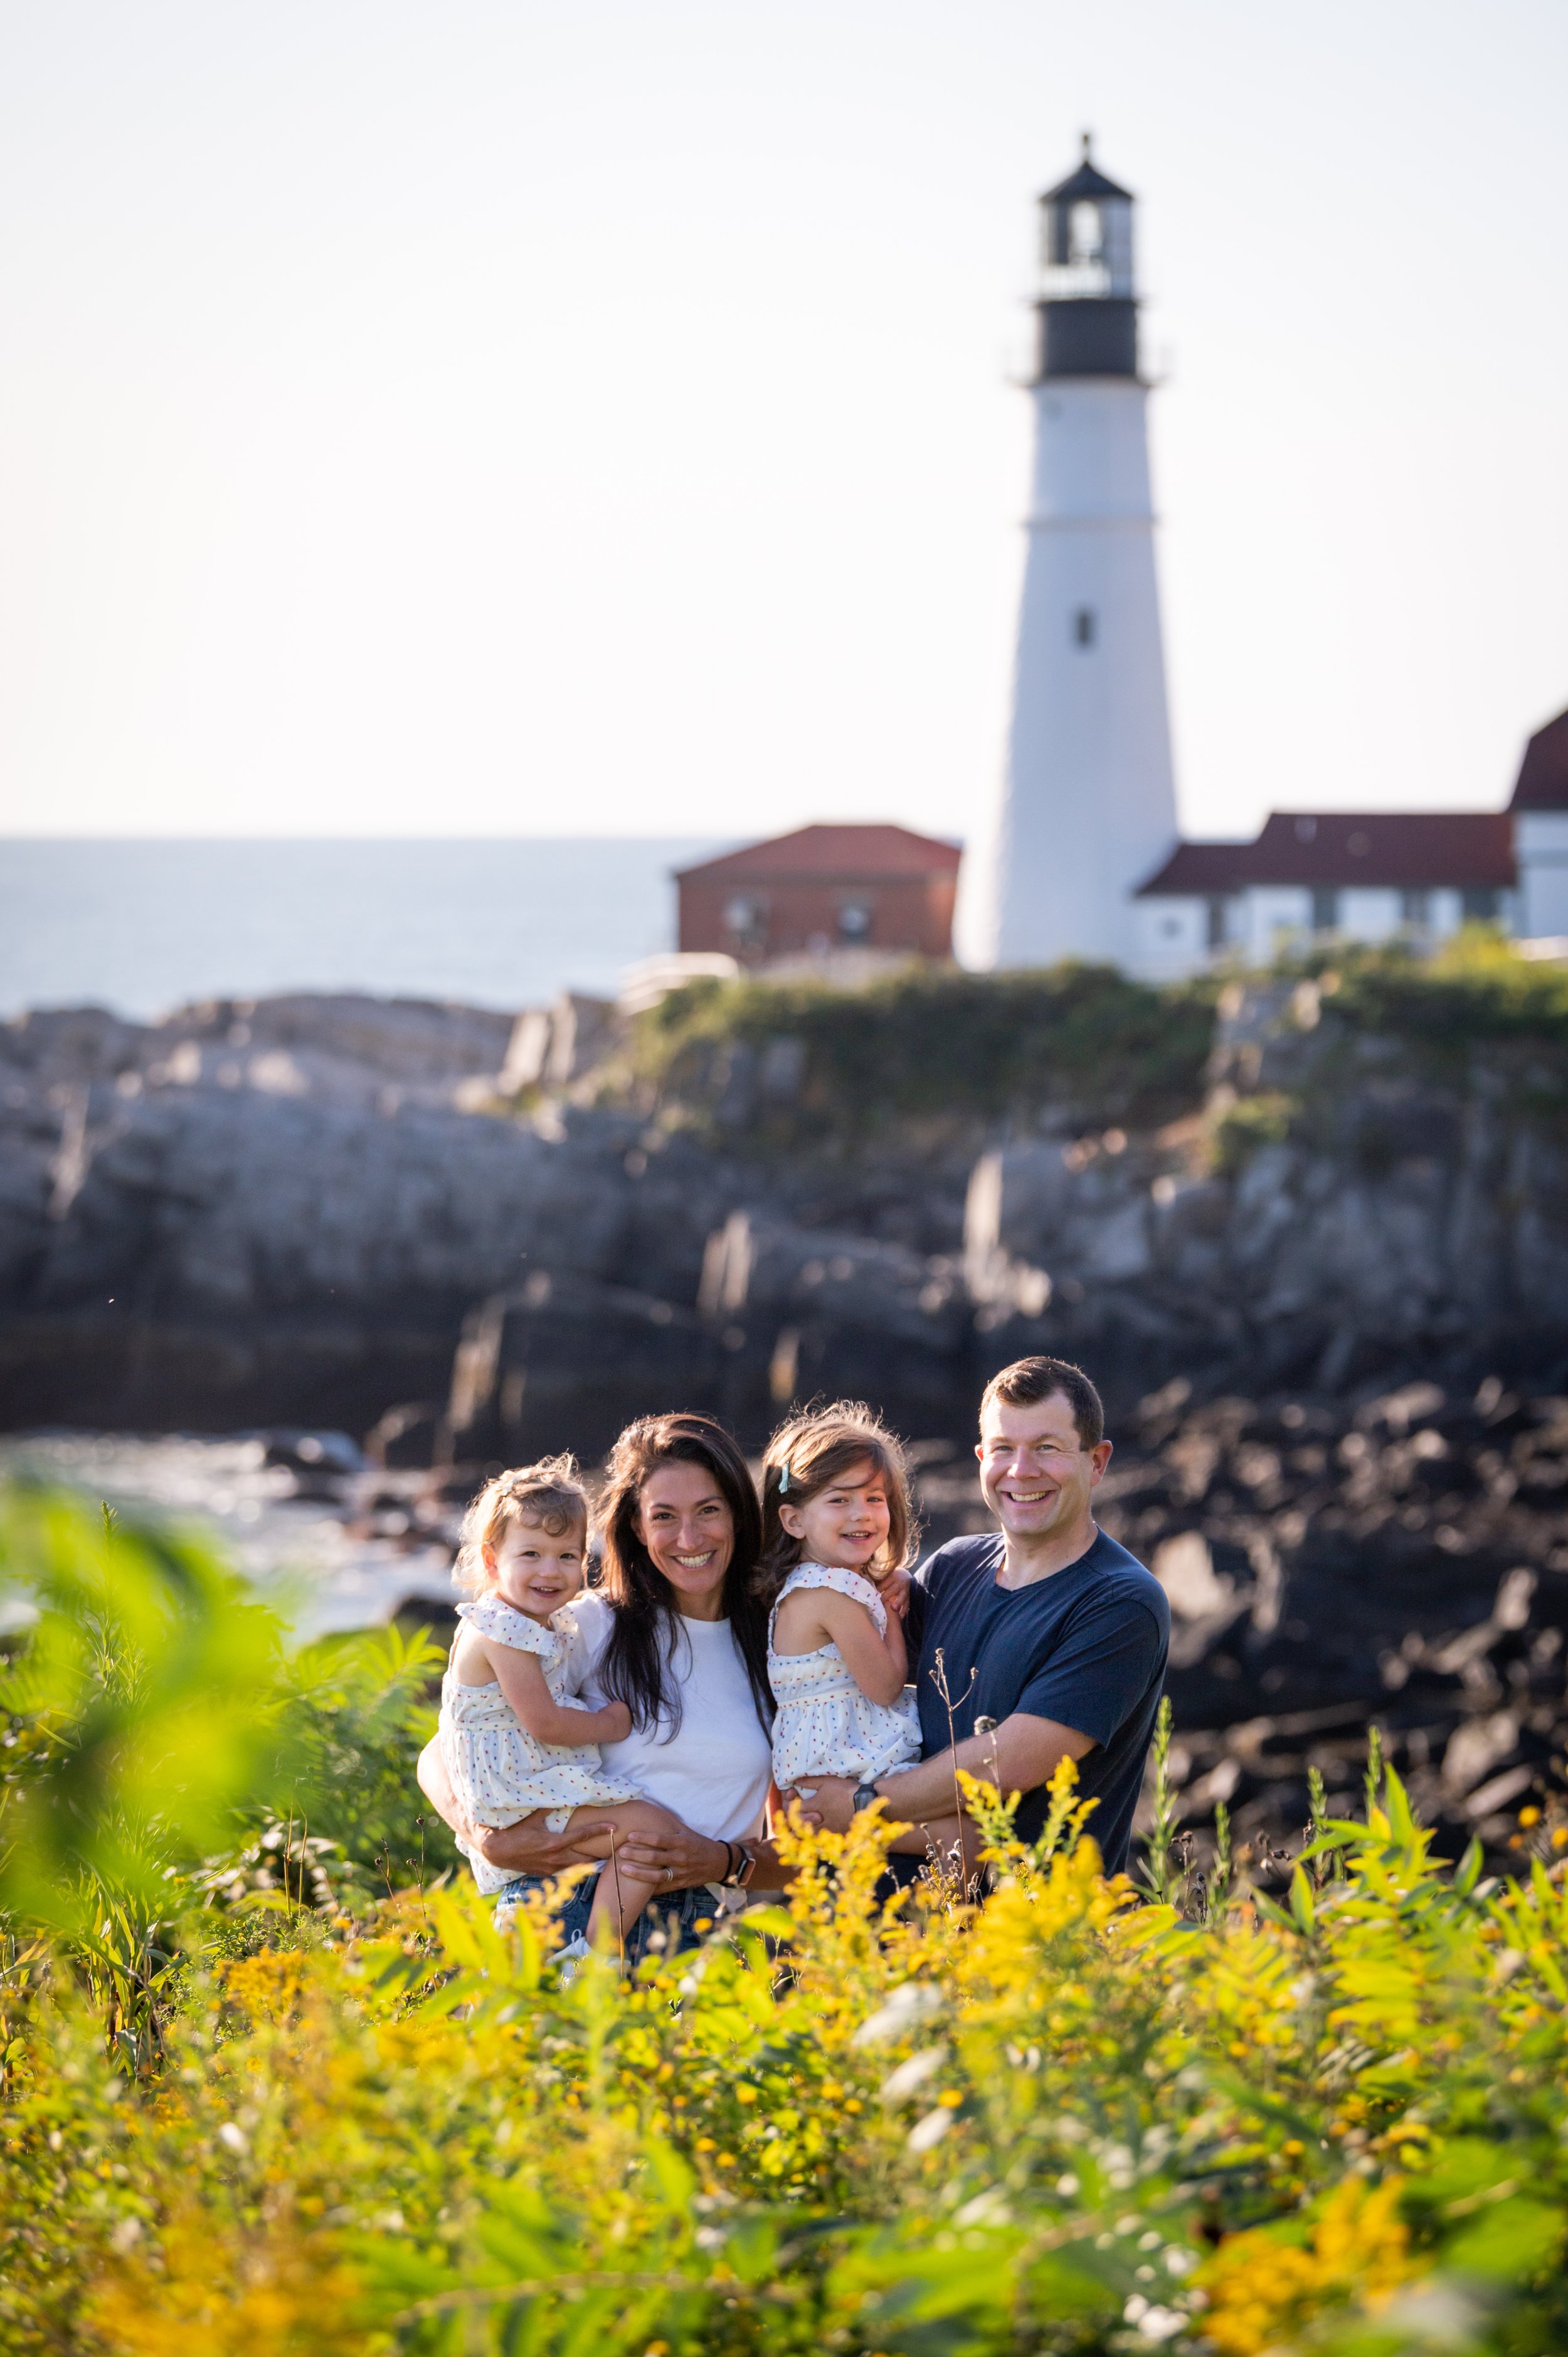 lindsay murphy photography | portland maine family photographer | cape elizabeth lighthouse family photo.jpg